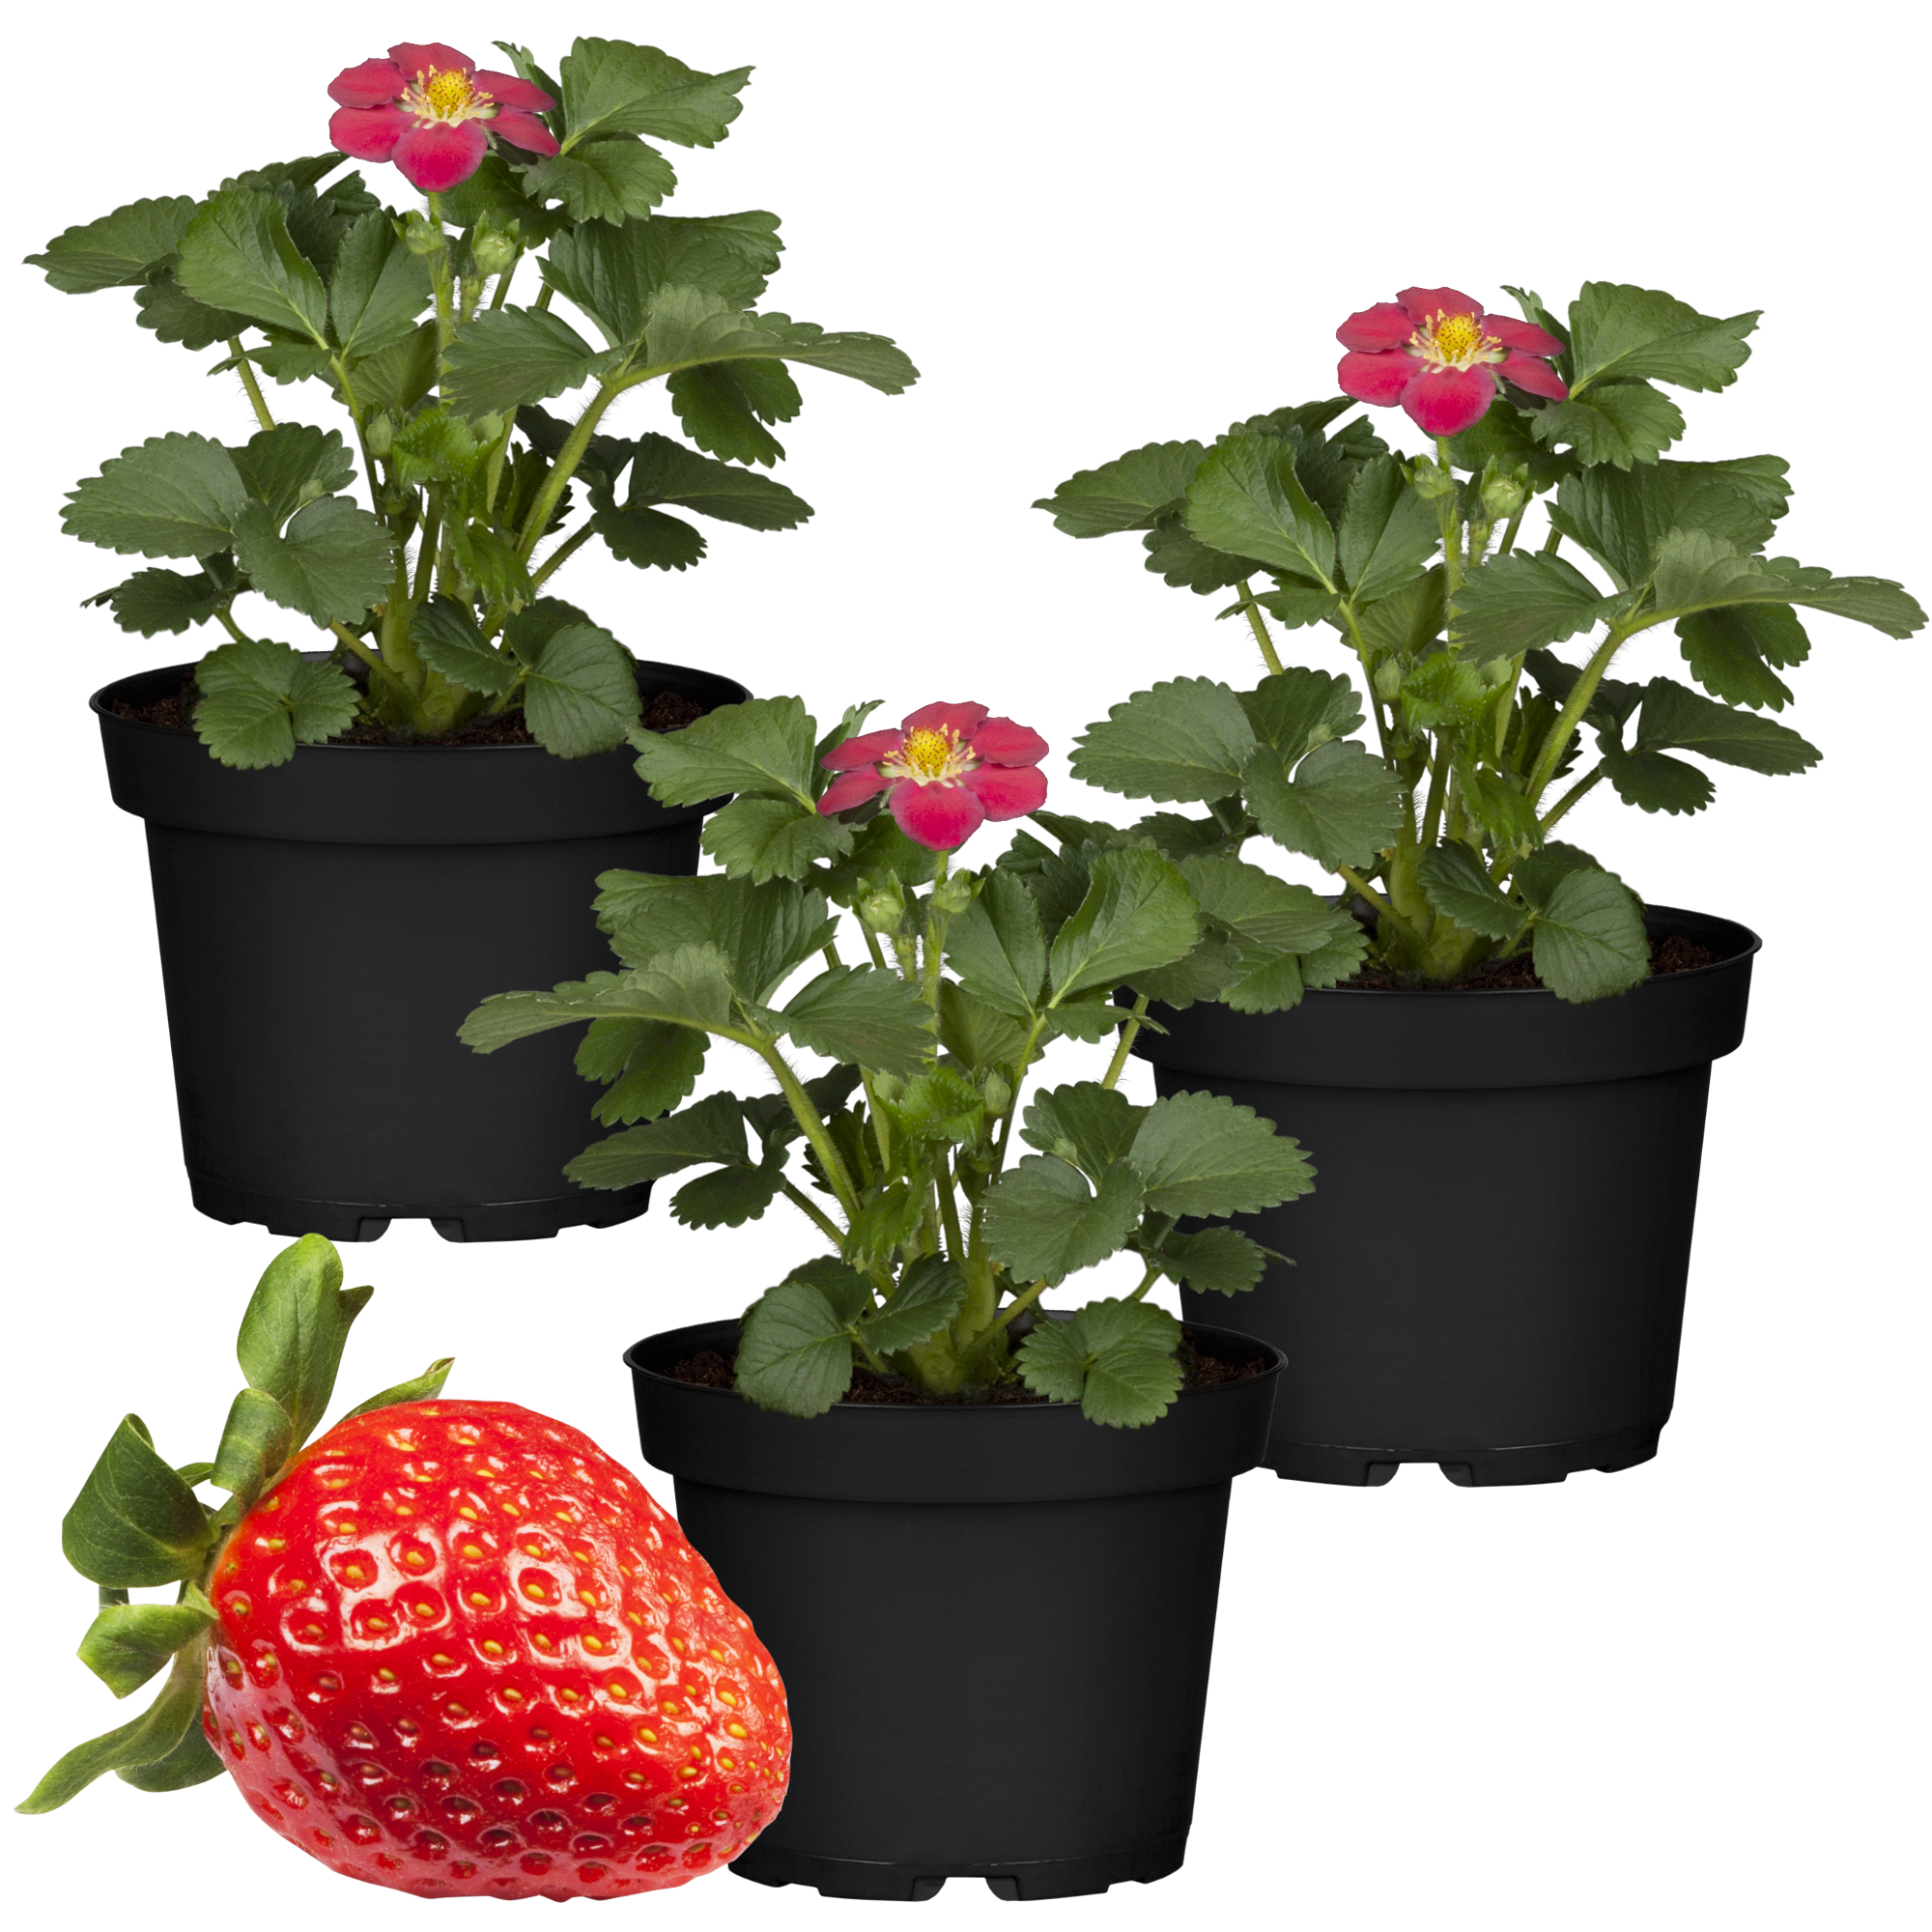 Erdbeere 'Toscana' 11 cm Topf 3er-Set + product picture